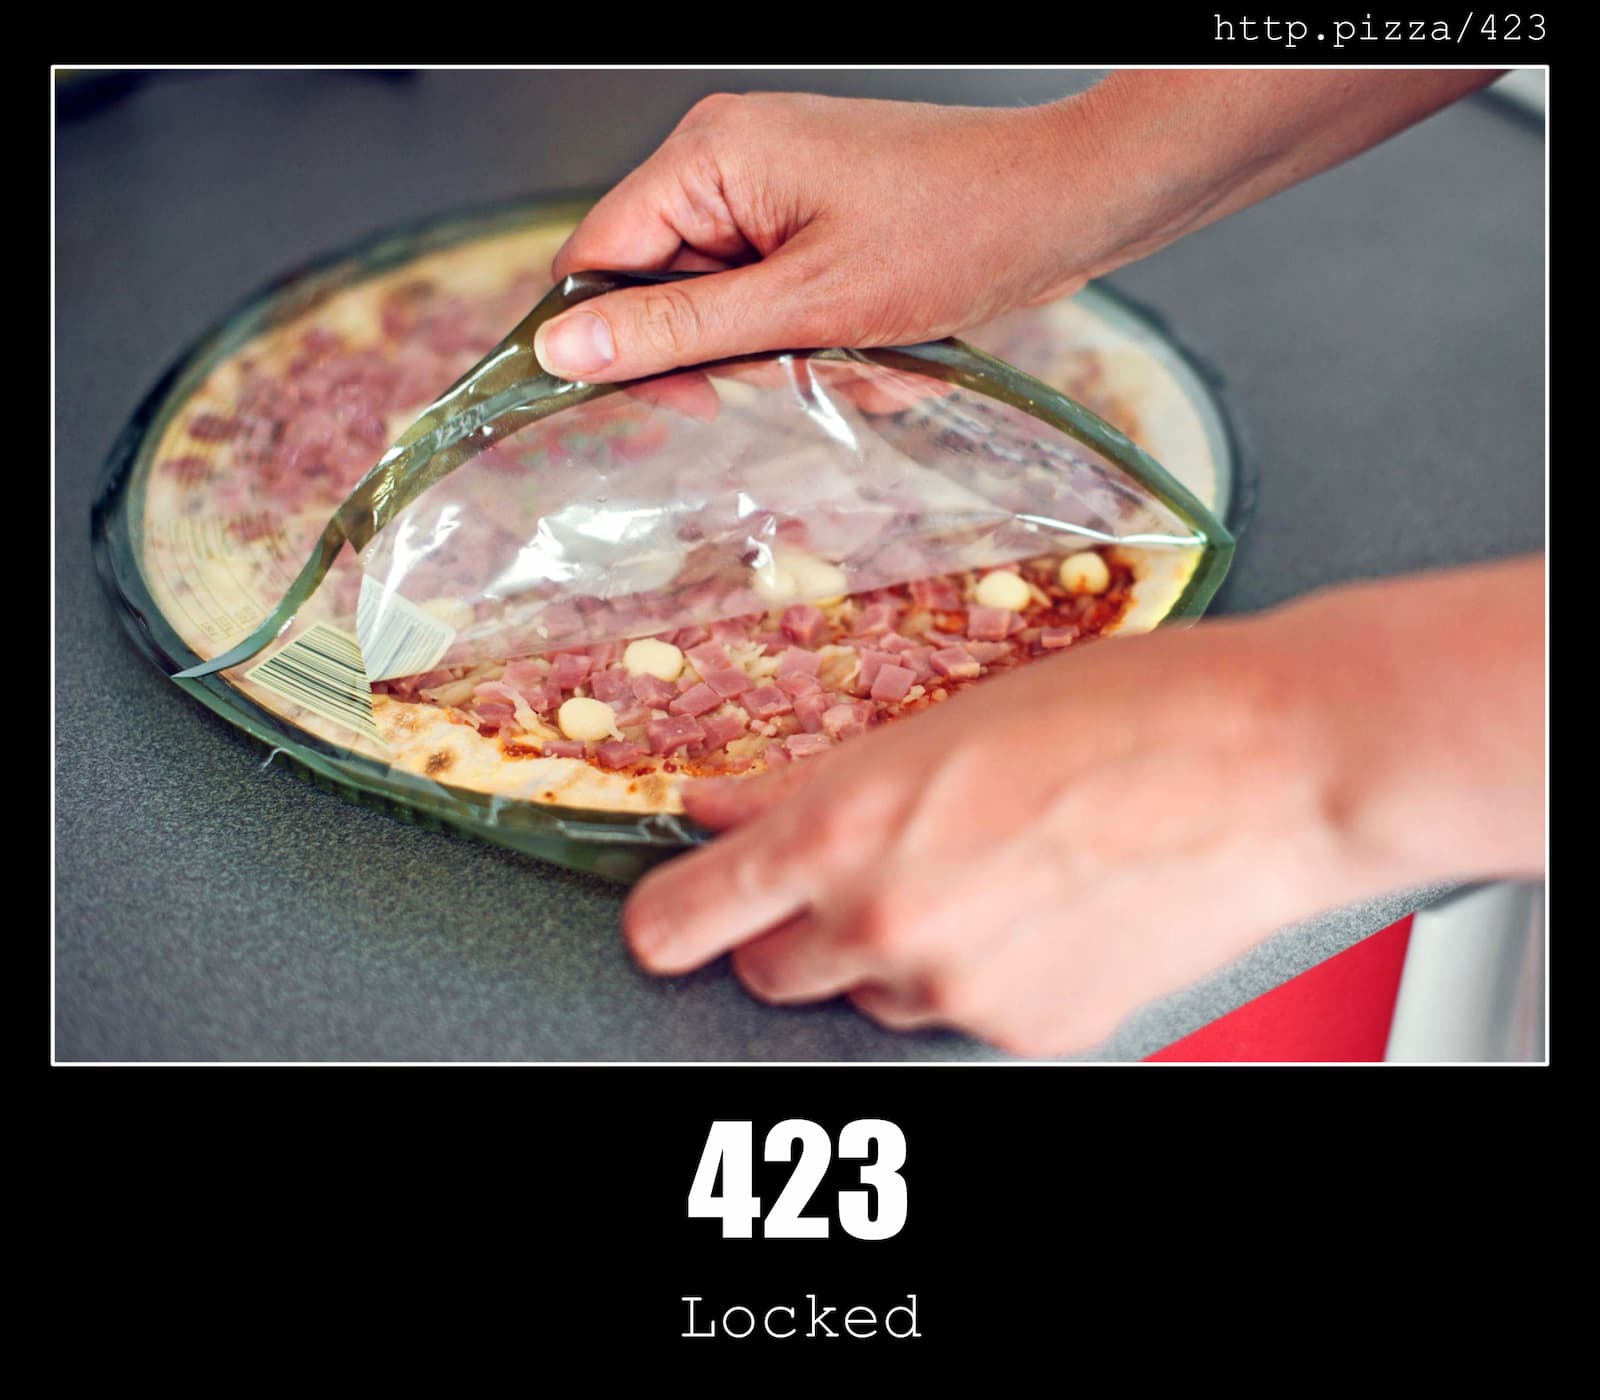 HTTP Status Code 423 Locked & Pizzas